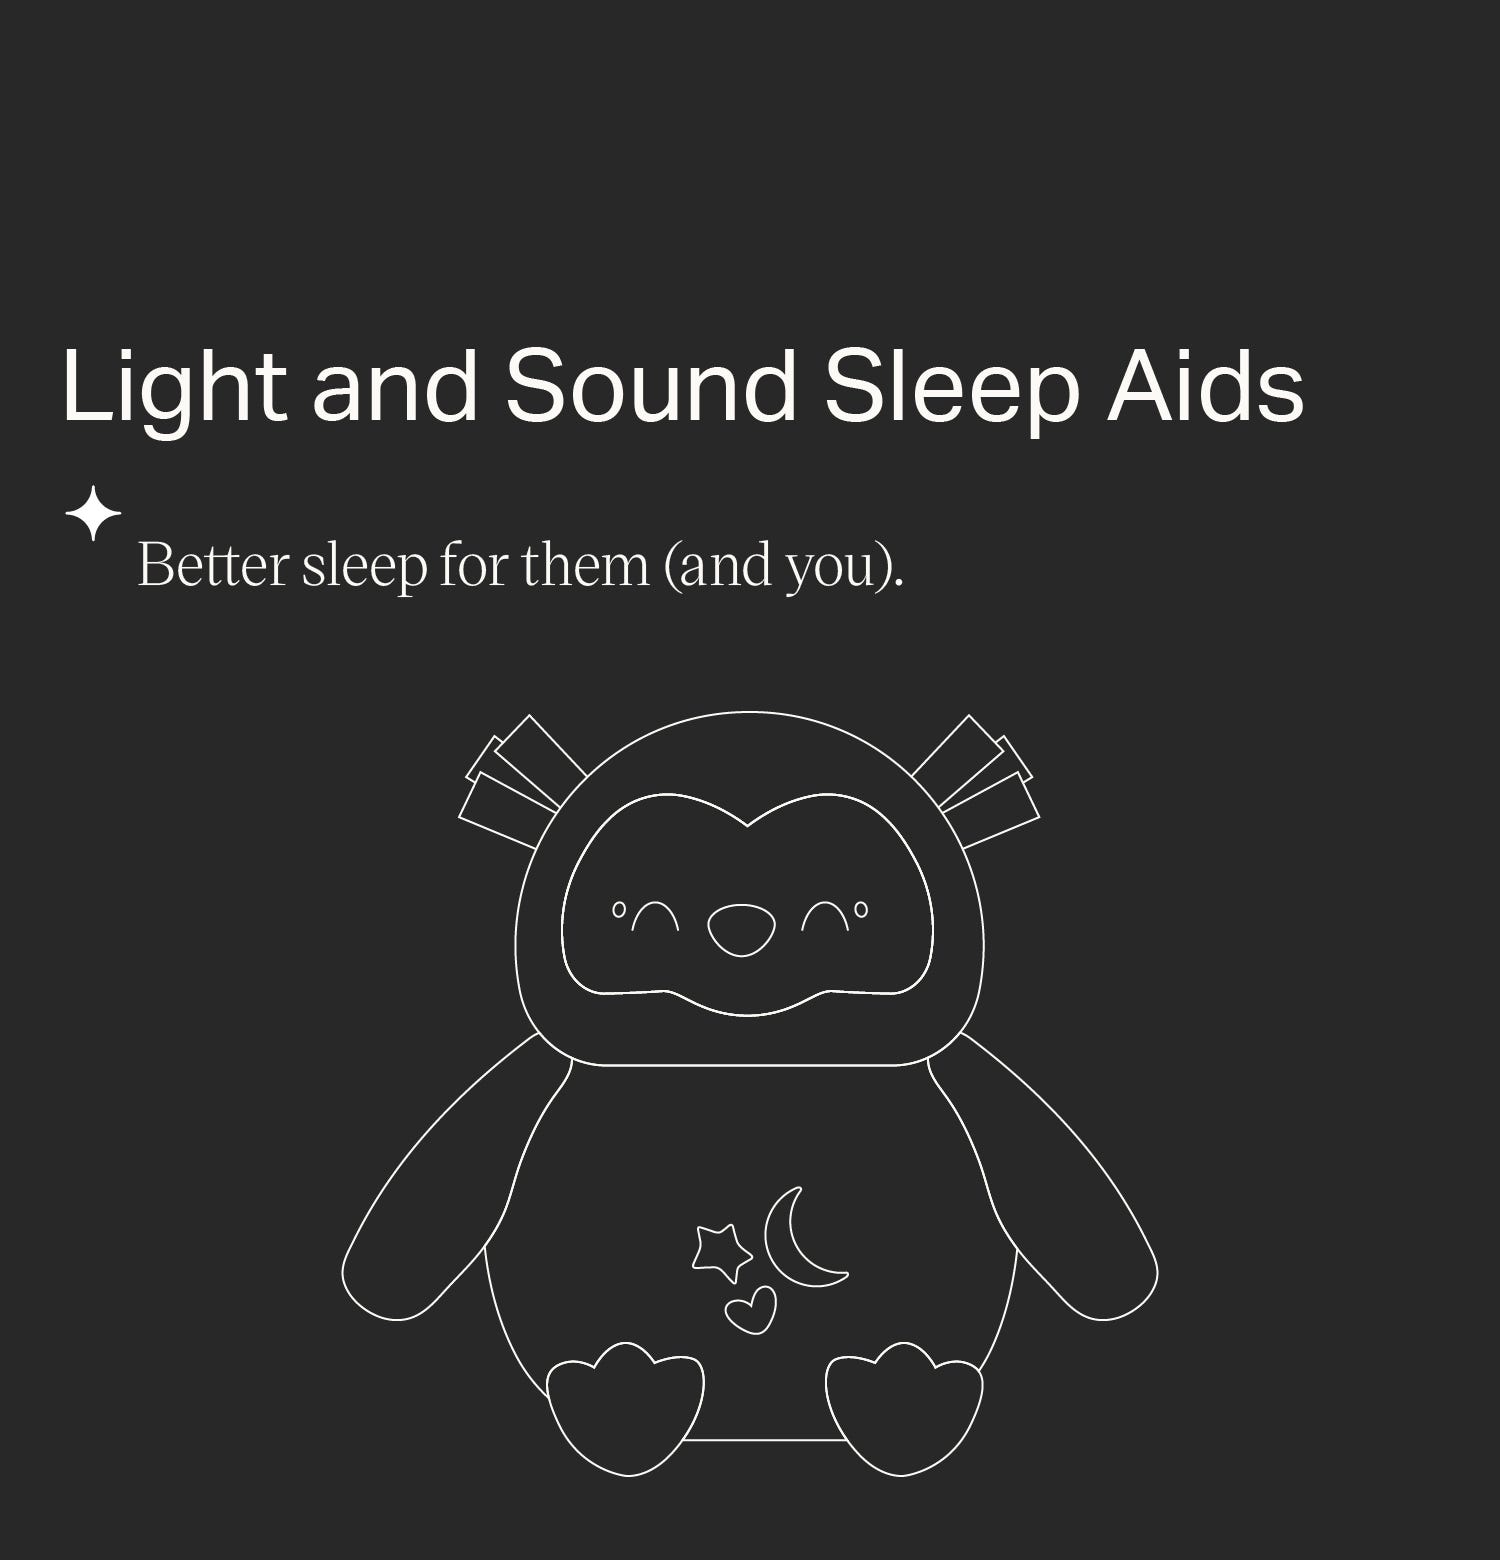 Light and Sound Sleep Aids